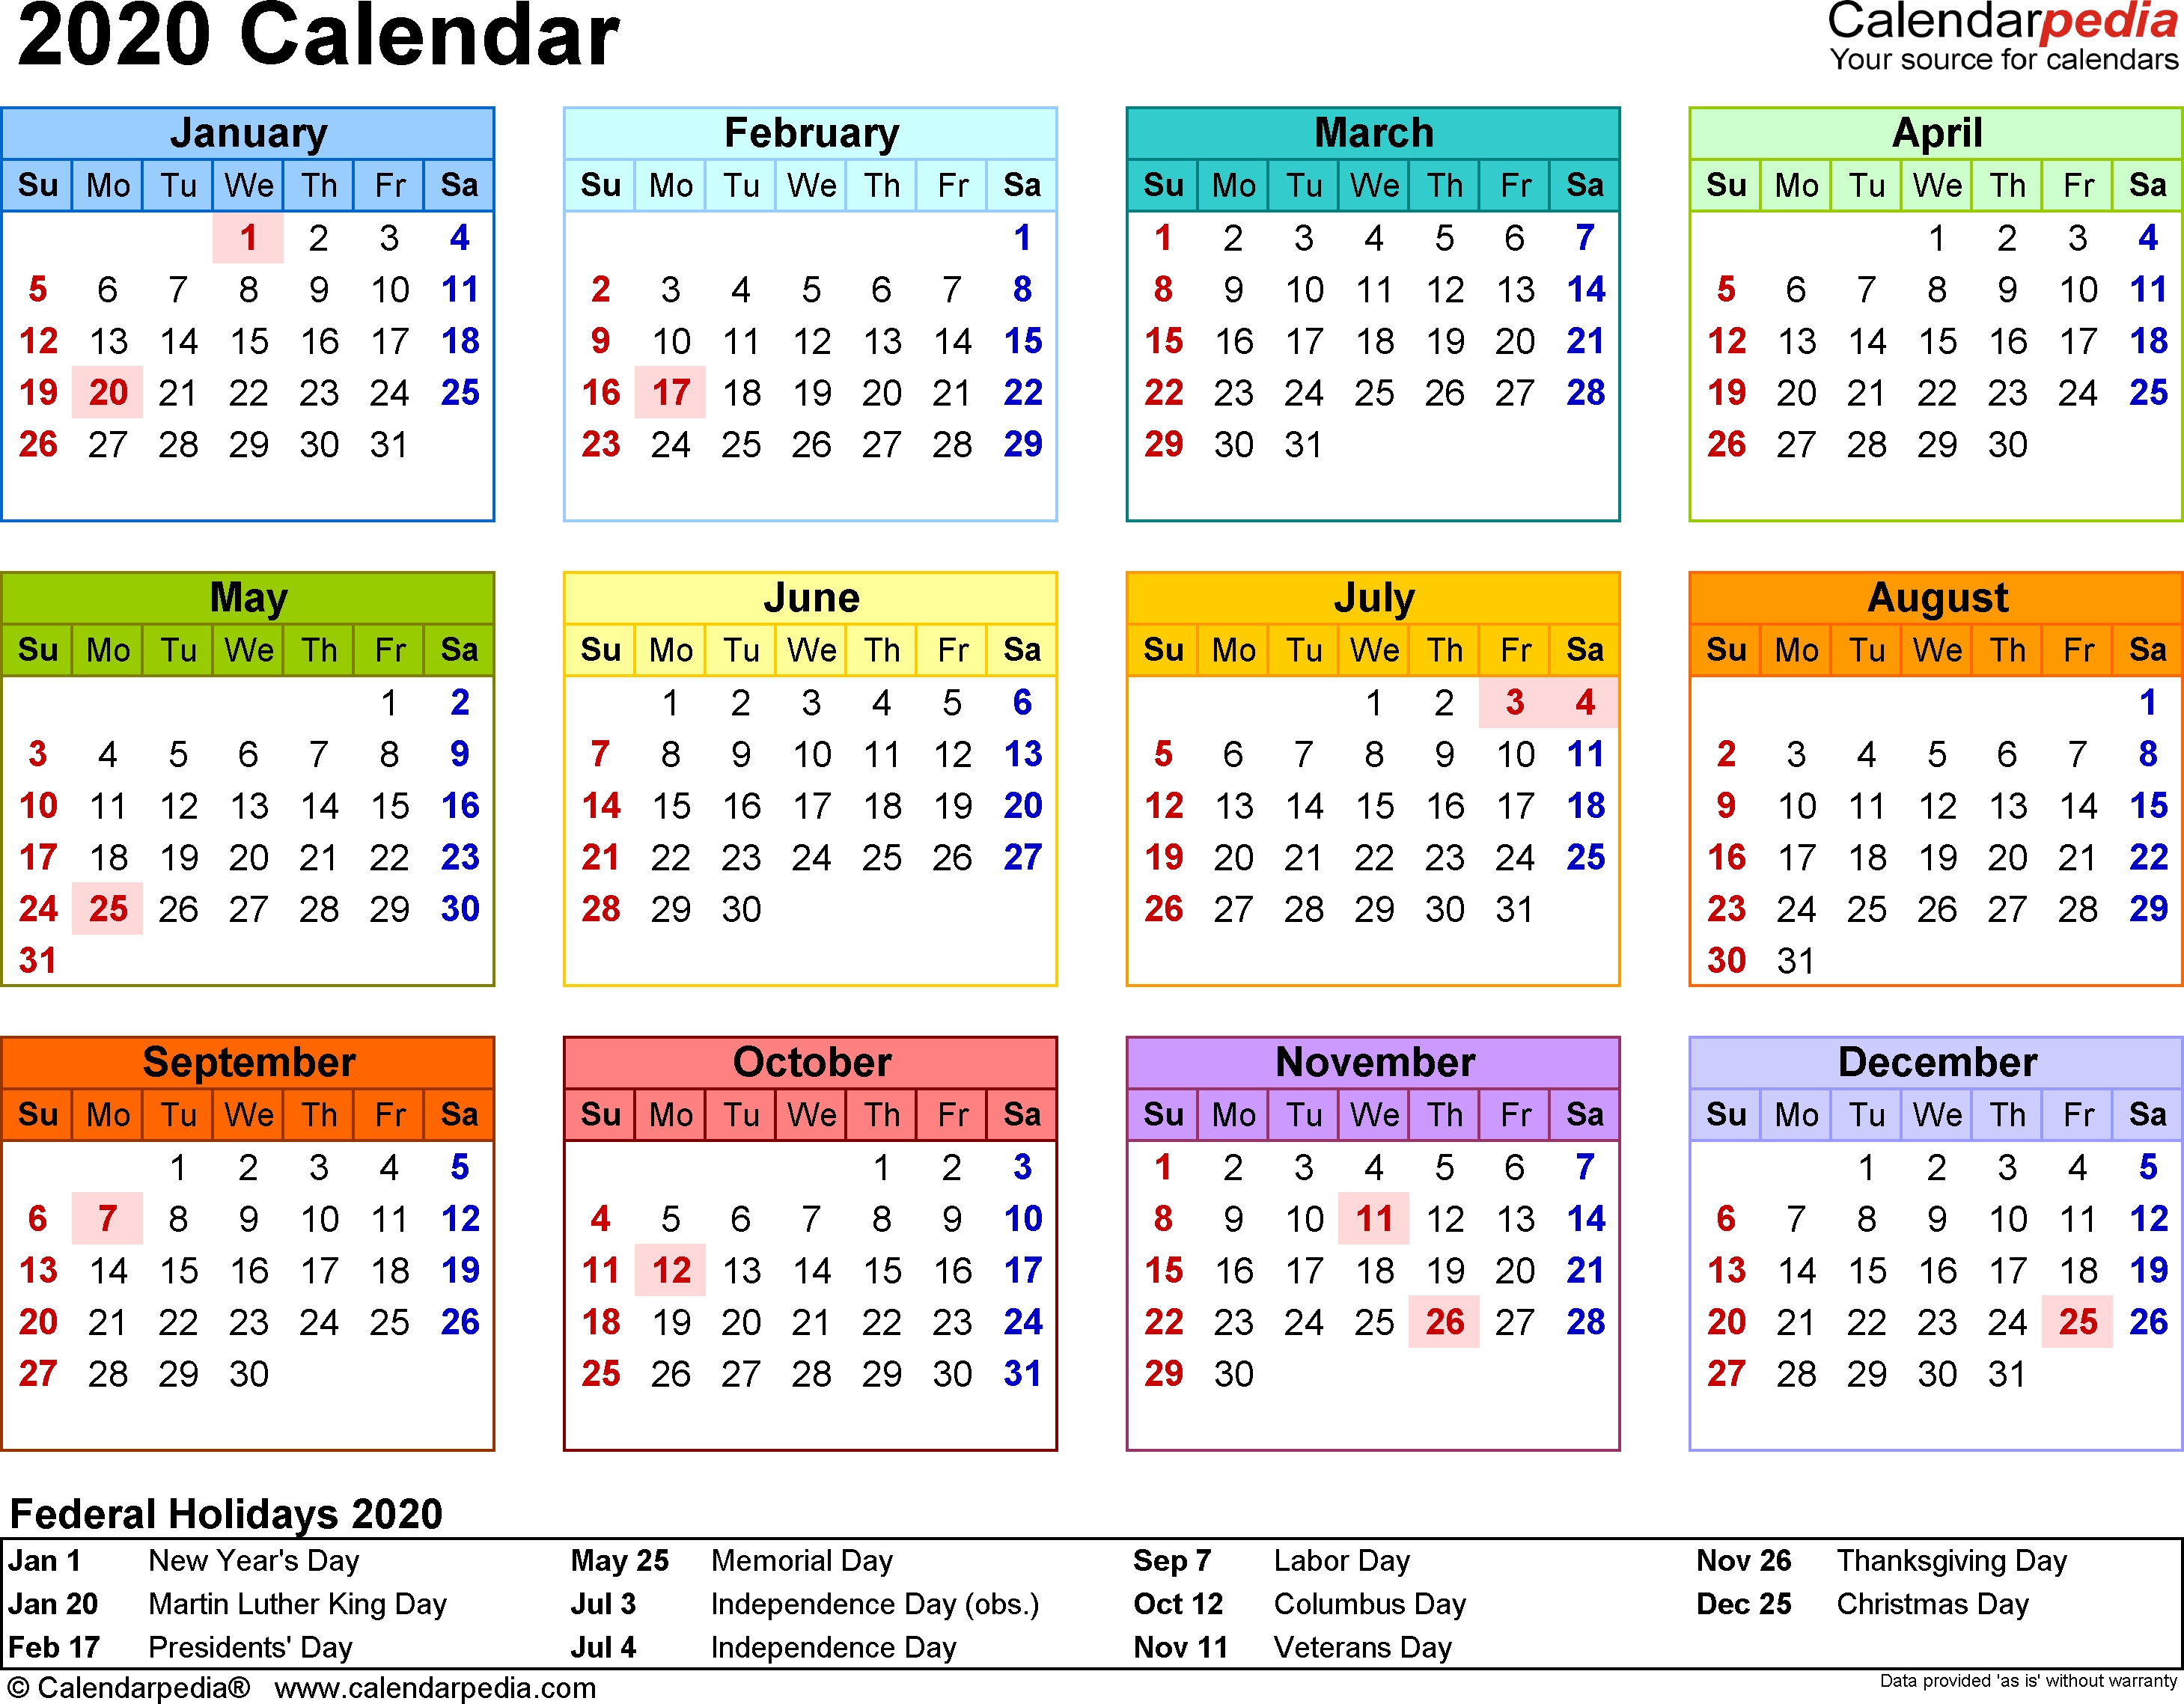 2020 Calendar Pdf - 17 Free Printable Calendar Templates intended for Free 2020 Printable Pocket Calendar